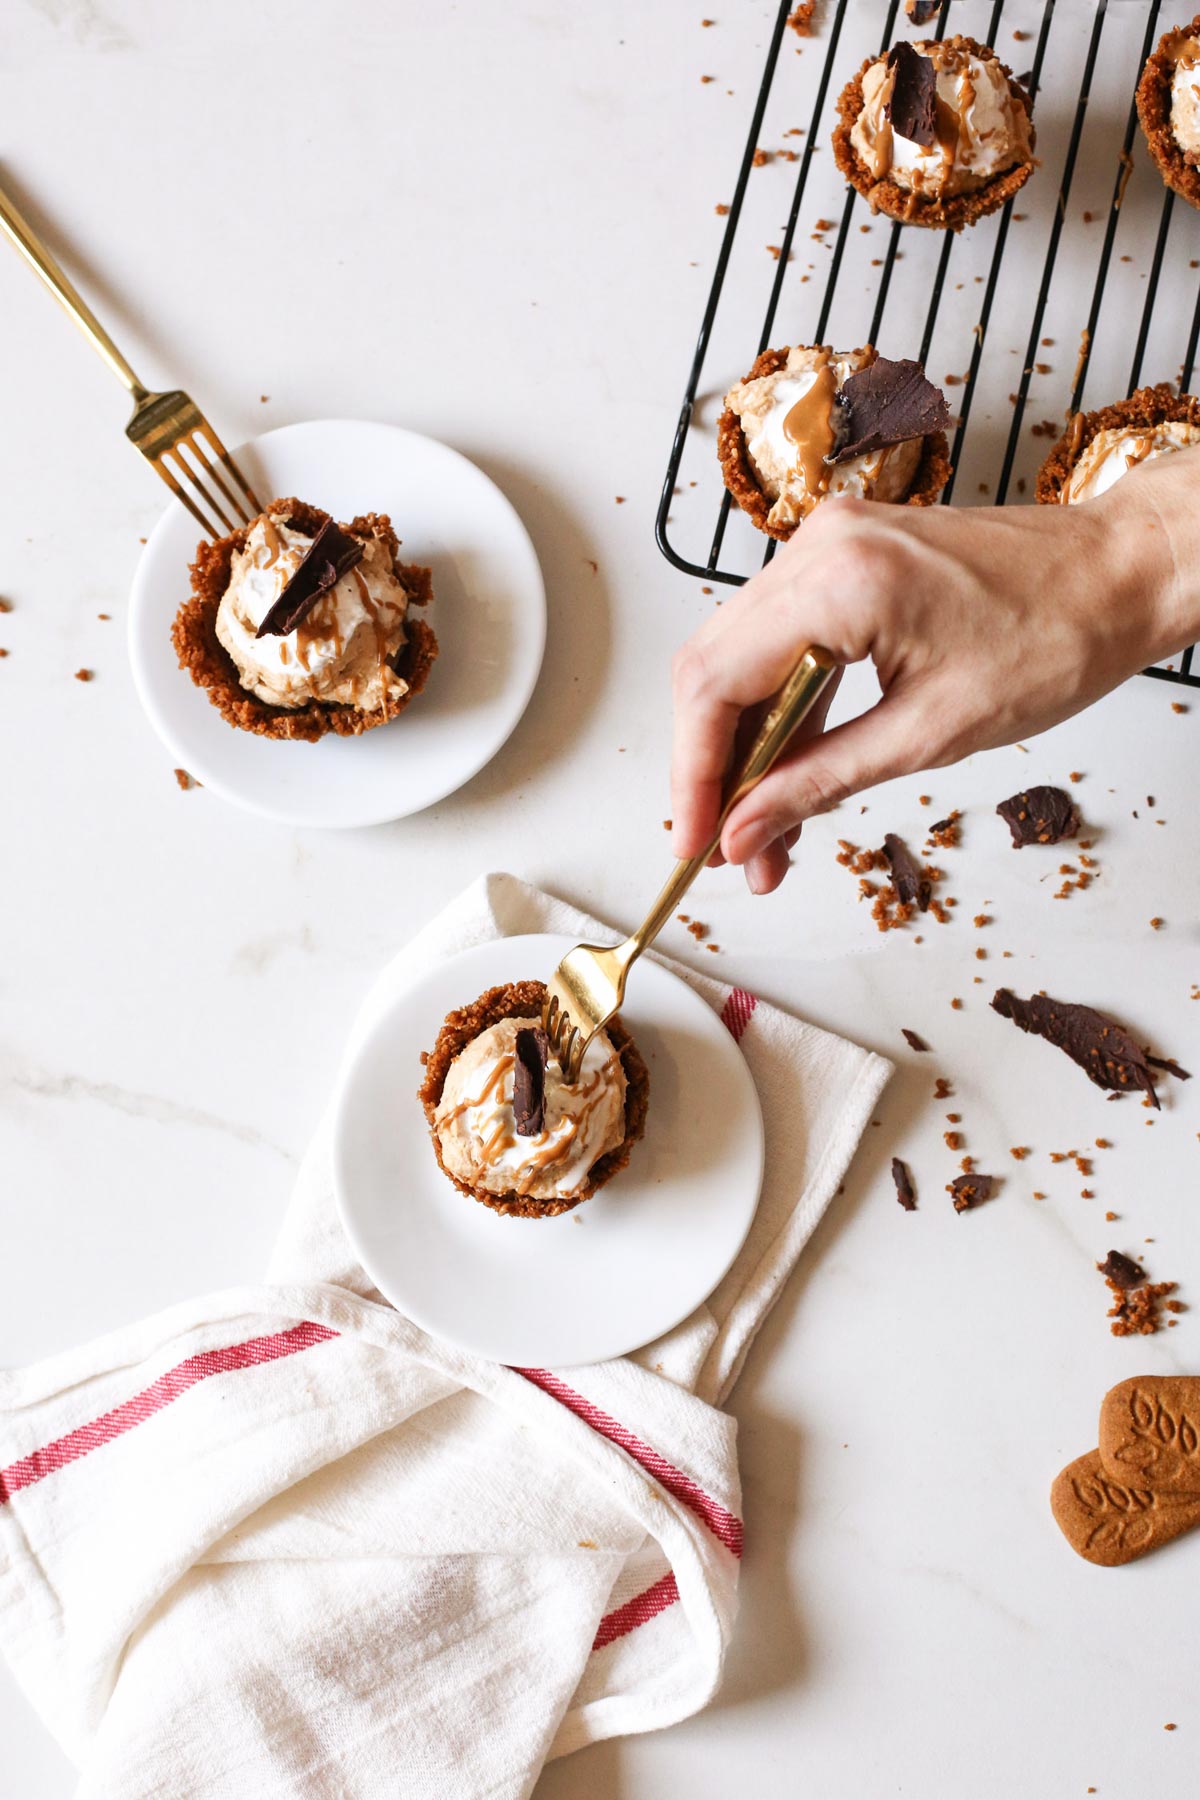 Mini Cookie Butter Tart recipe by Sugar & Cloth, an award winning DIY inspired lifestyle blog.